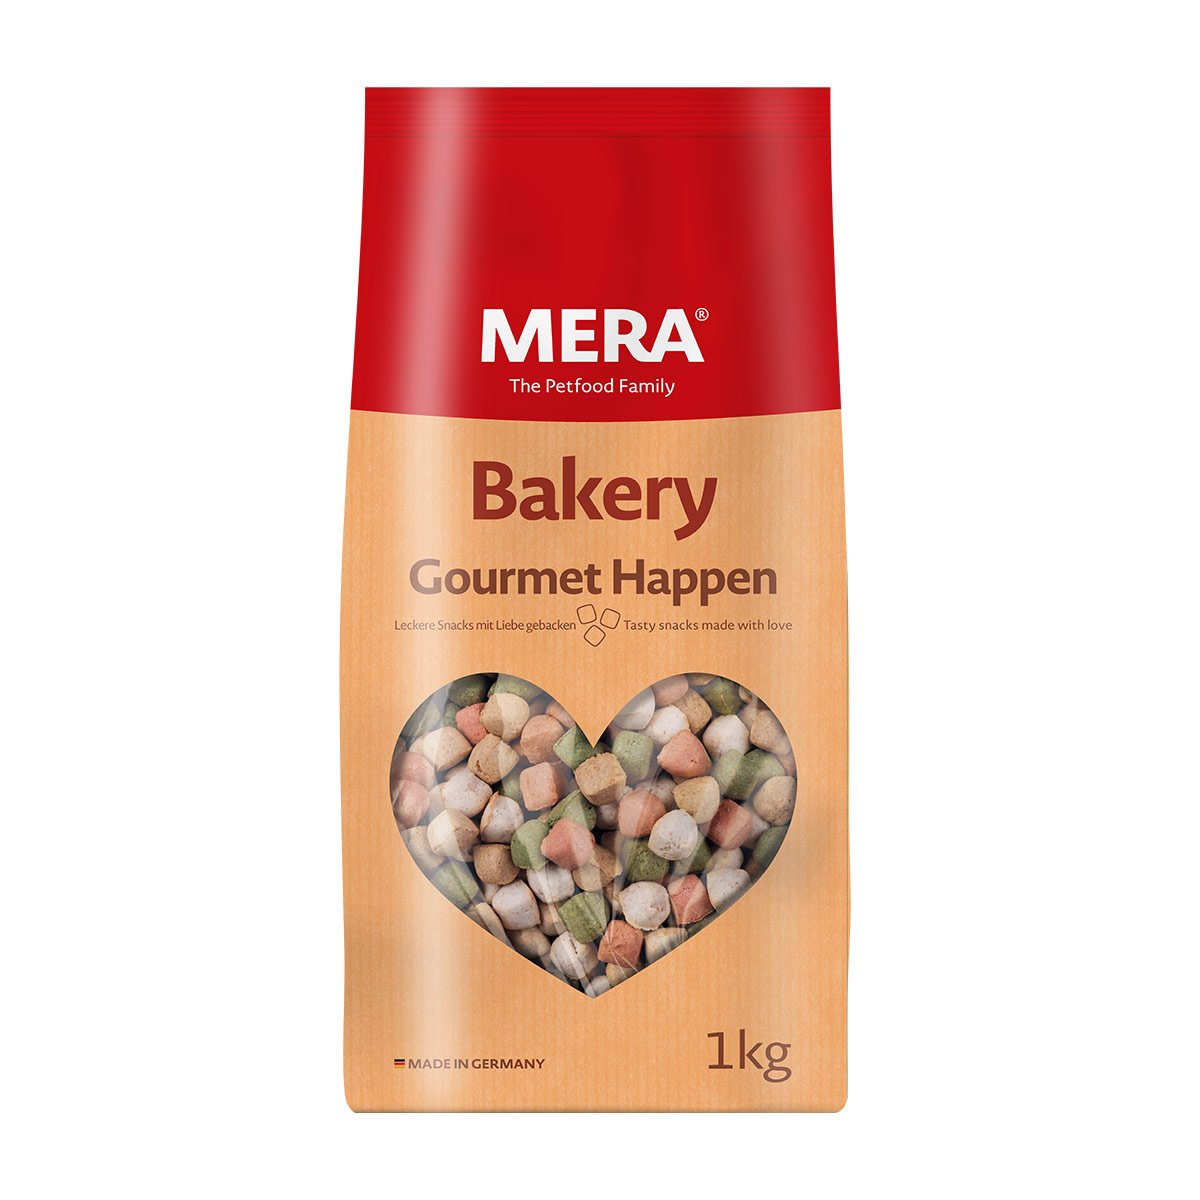 MERA Bakery Gourmet Happen 1 kg